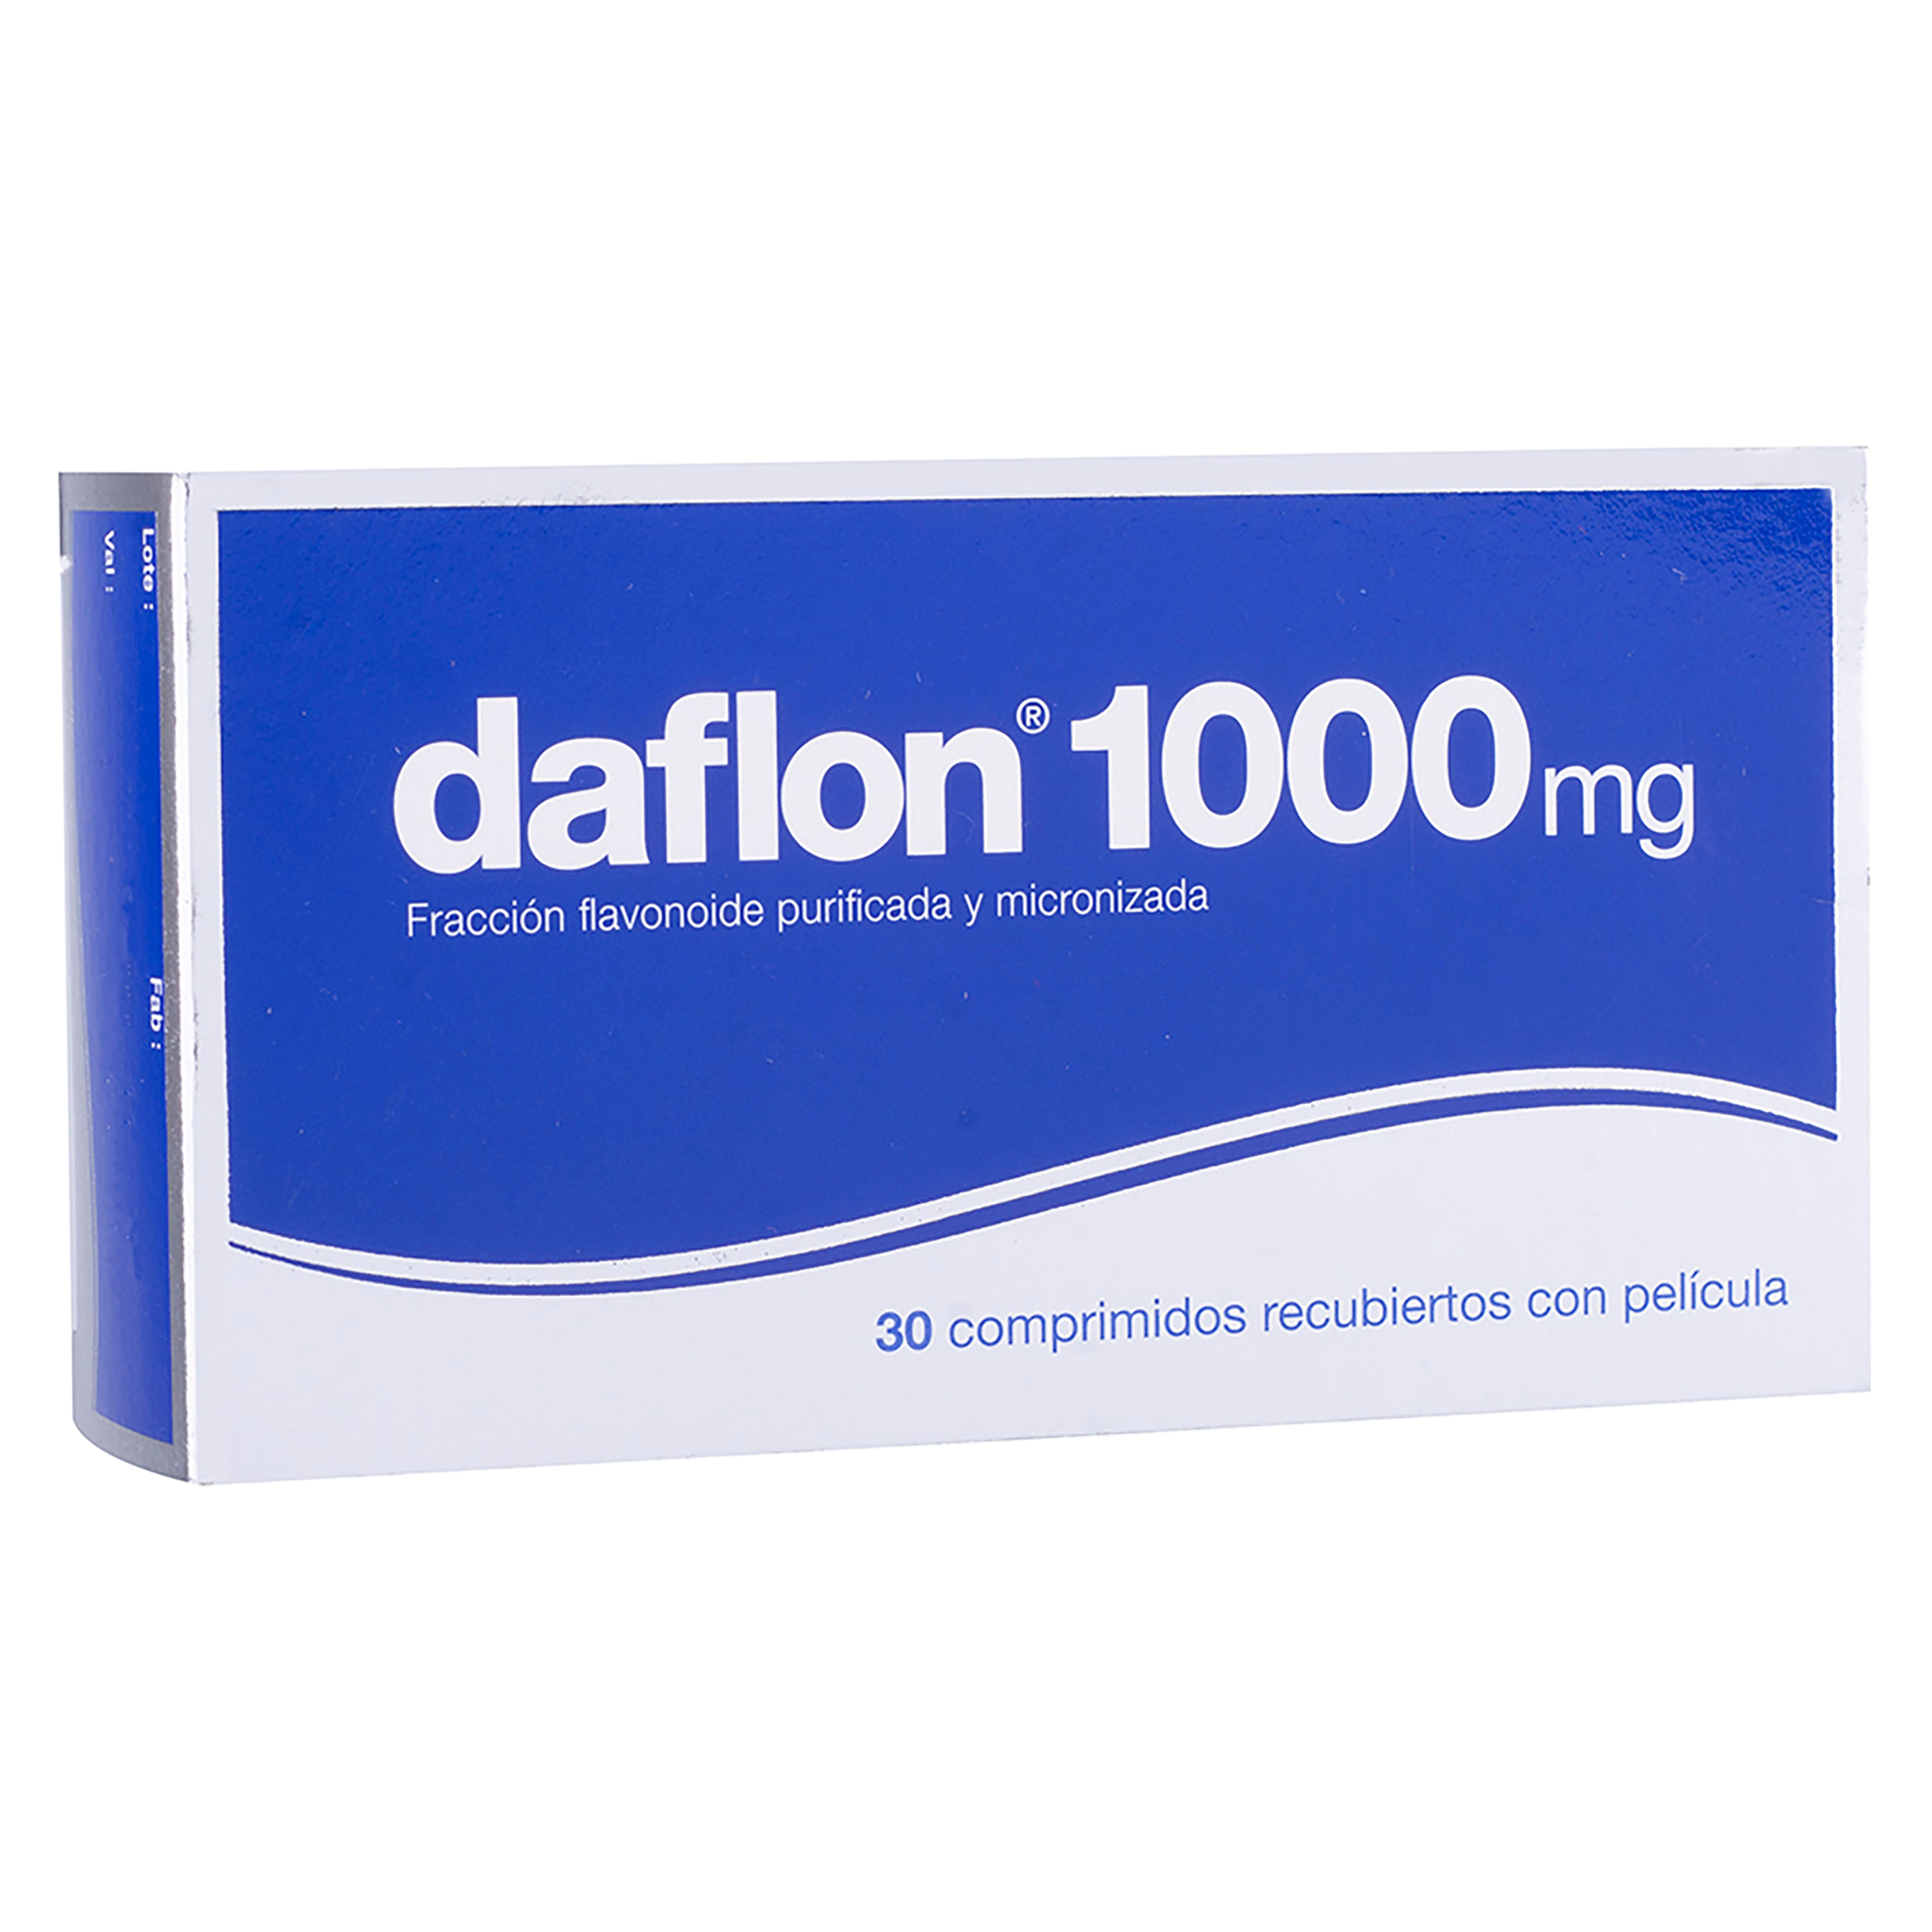 Daflon 1000mg 60 Comprimidos